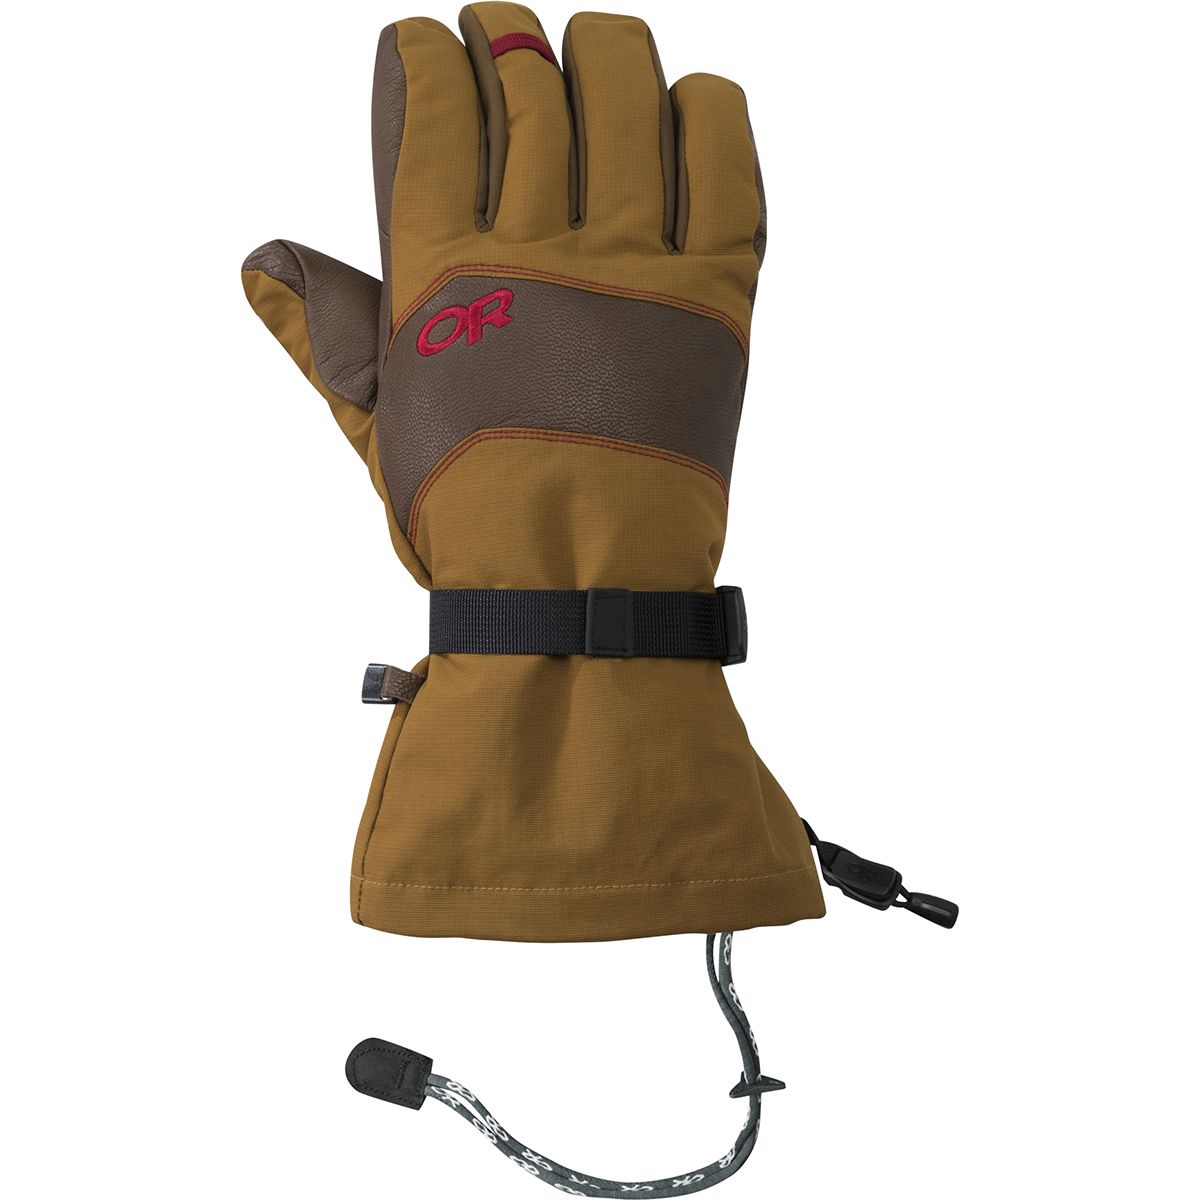 Outdoor Research HighCamp Glove - Men's Ochre/Carob